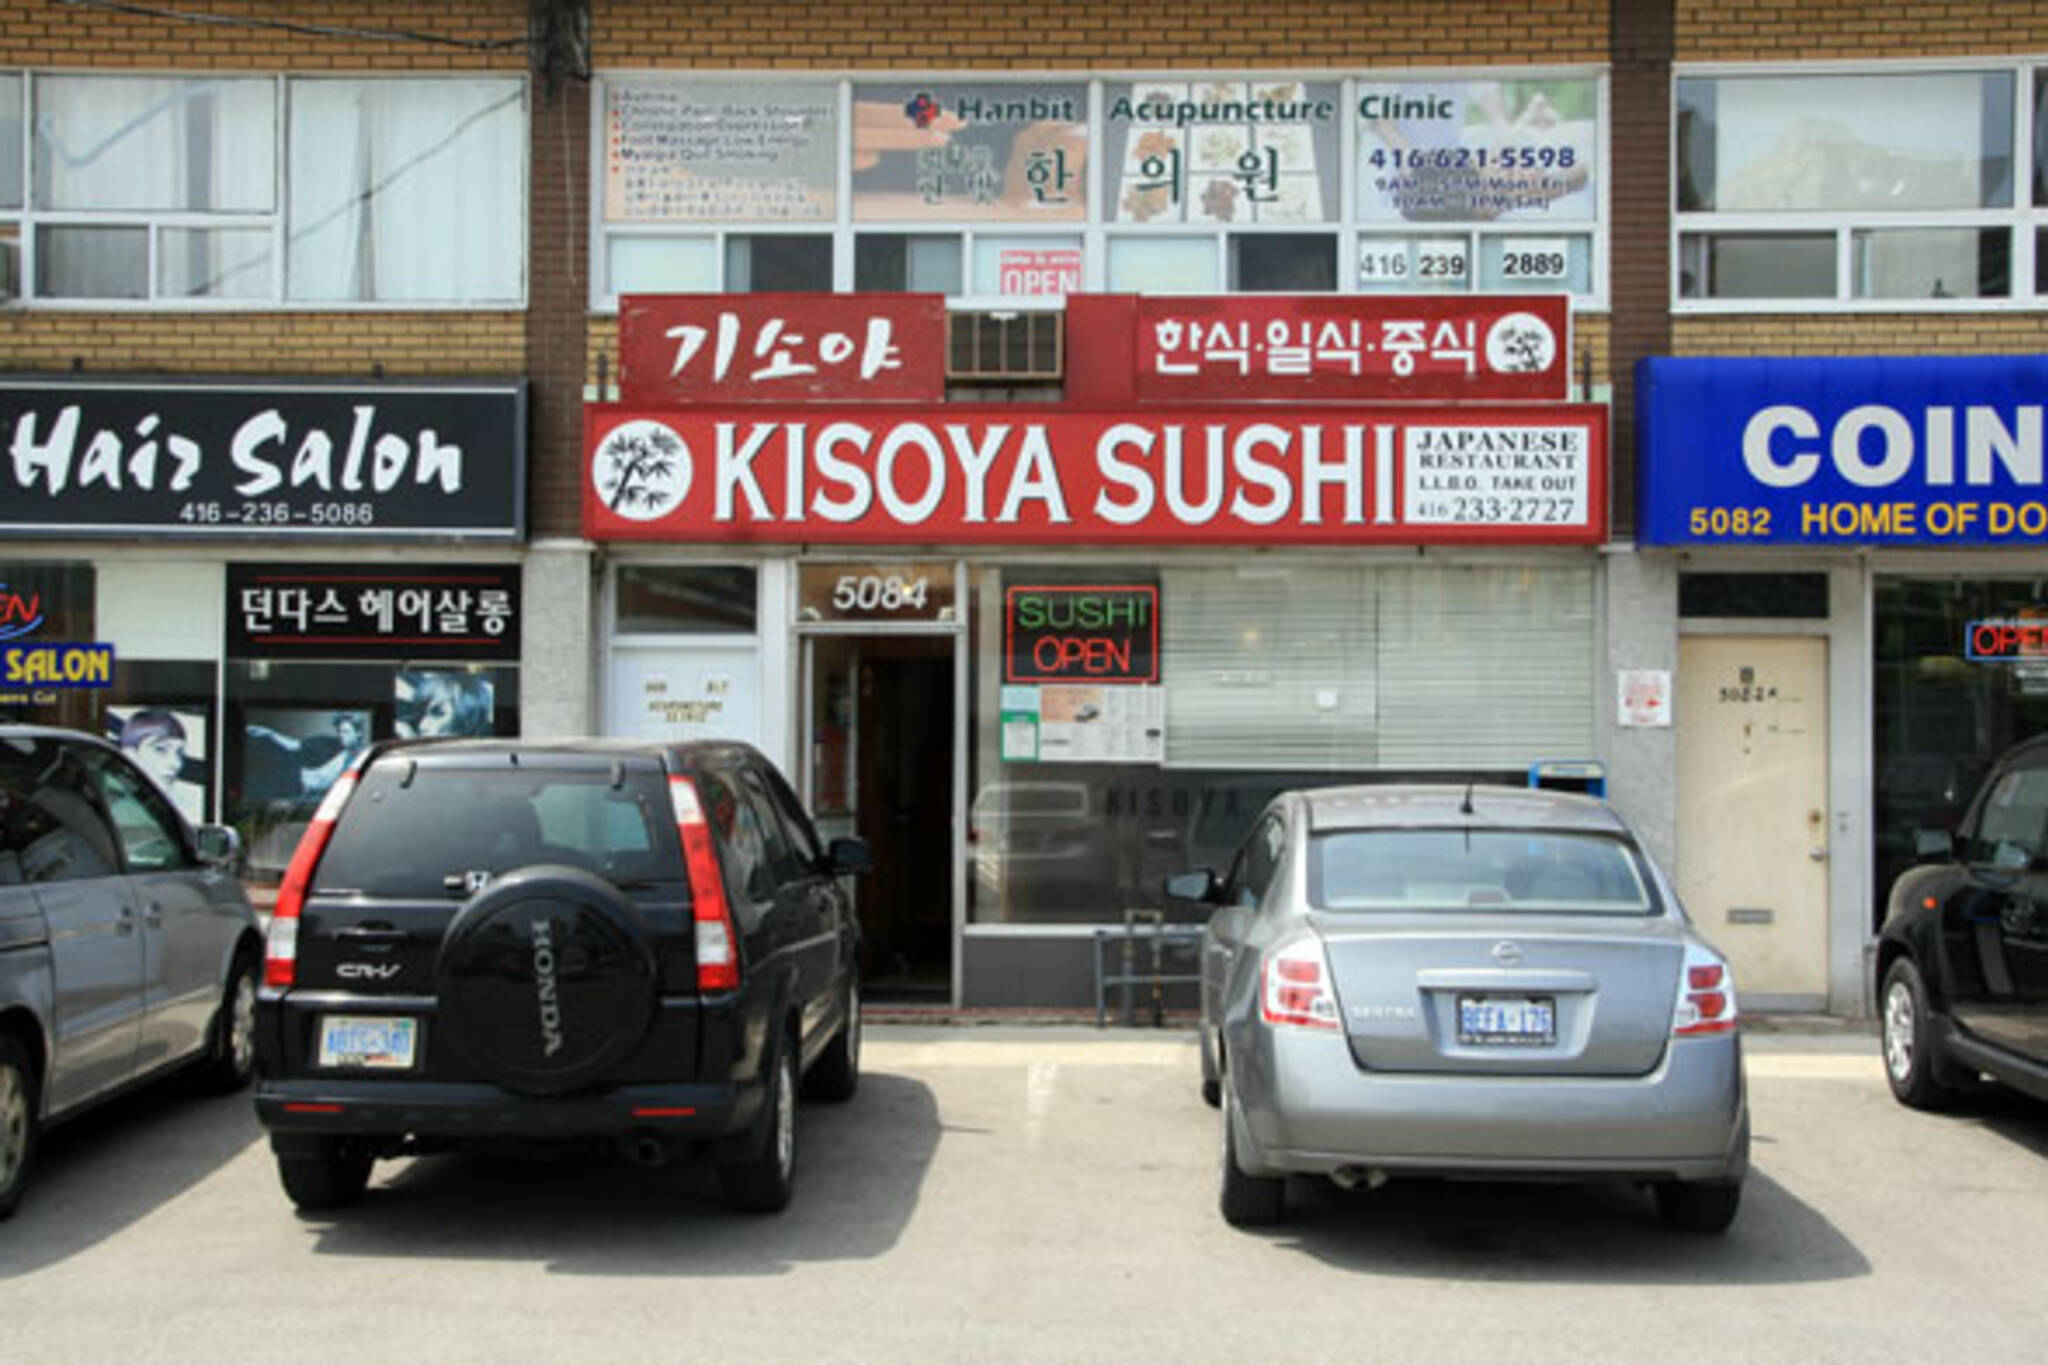 Kisoya Sushi